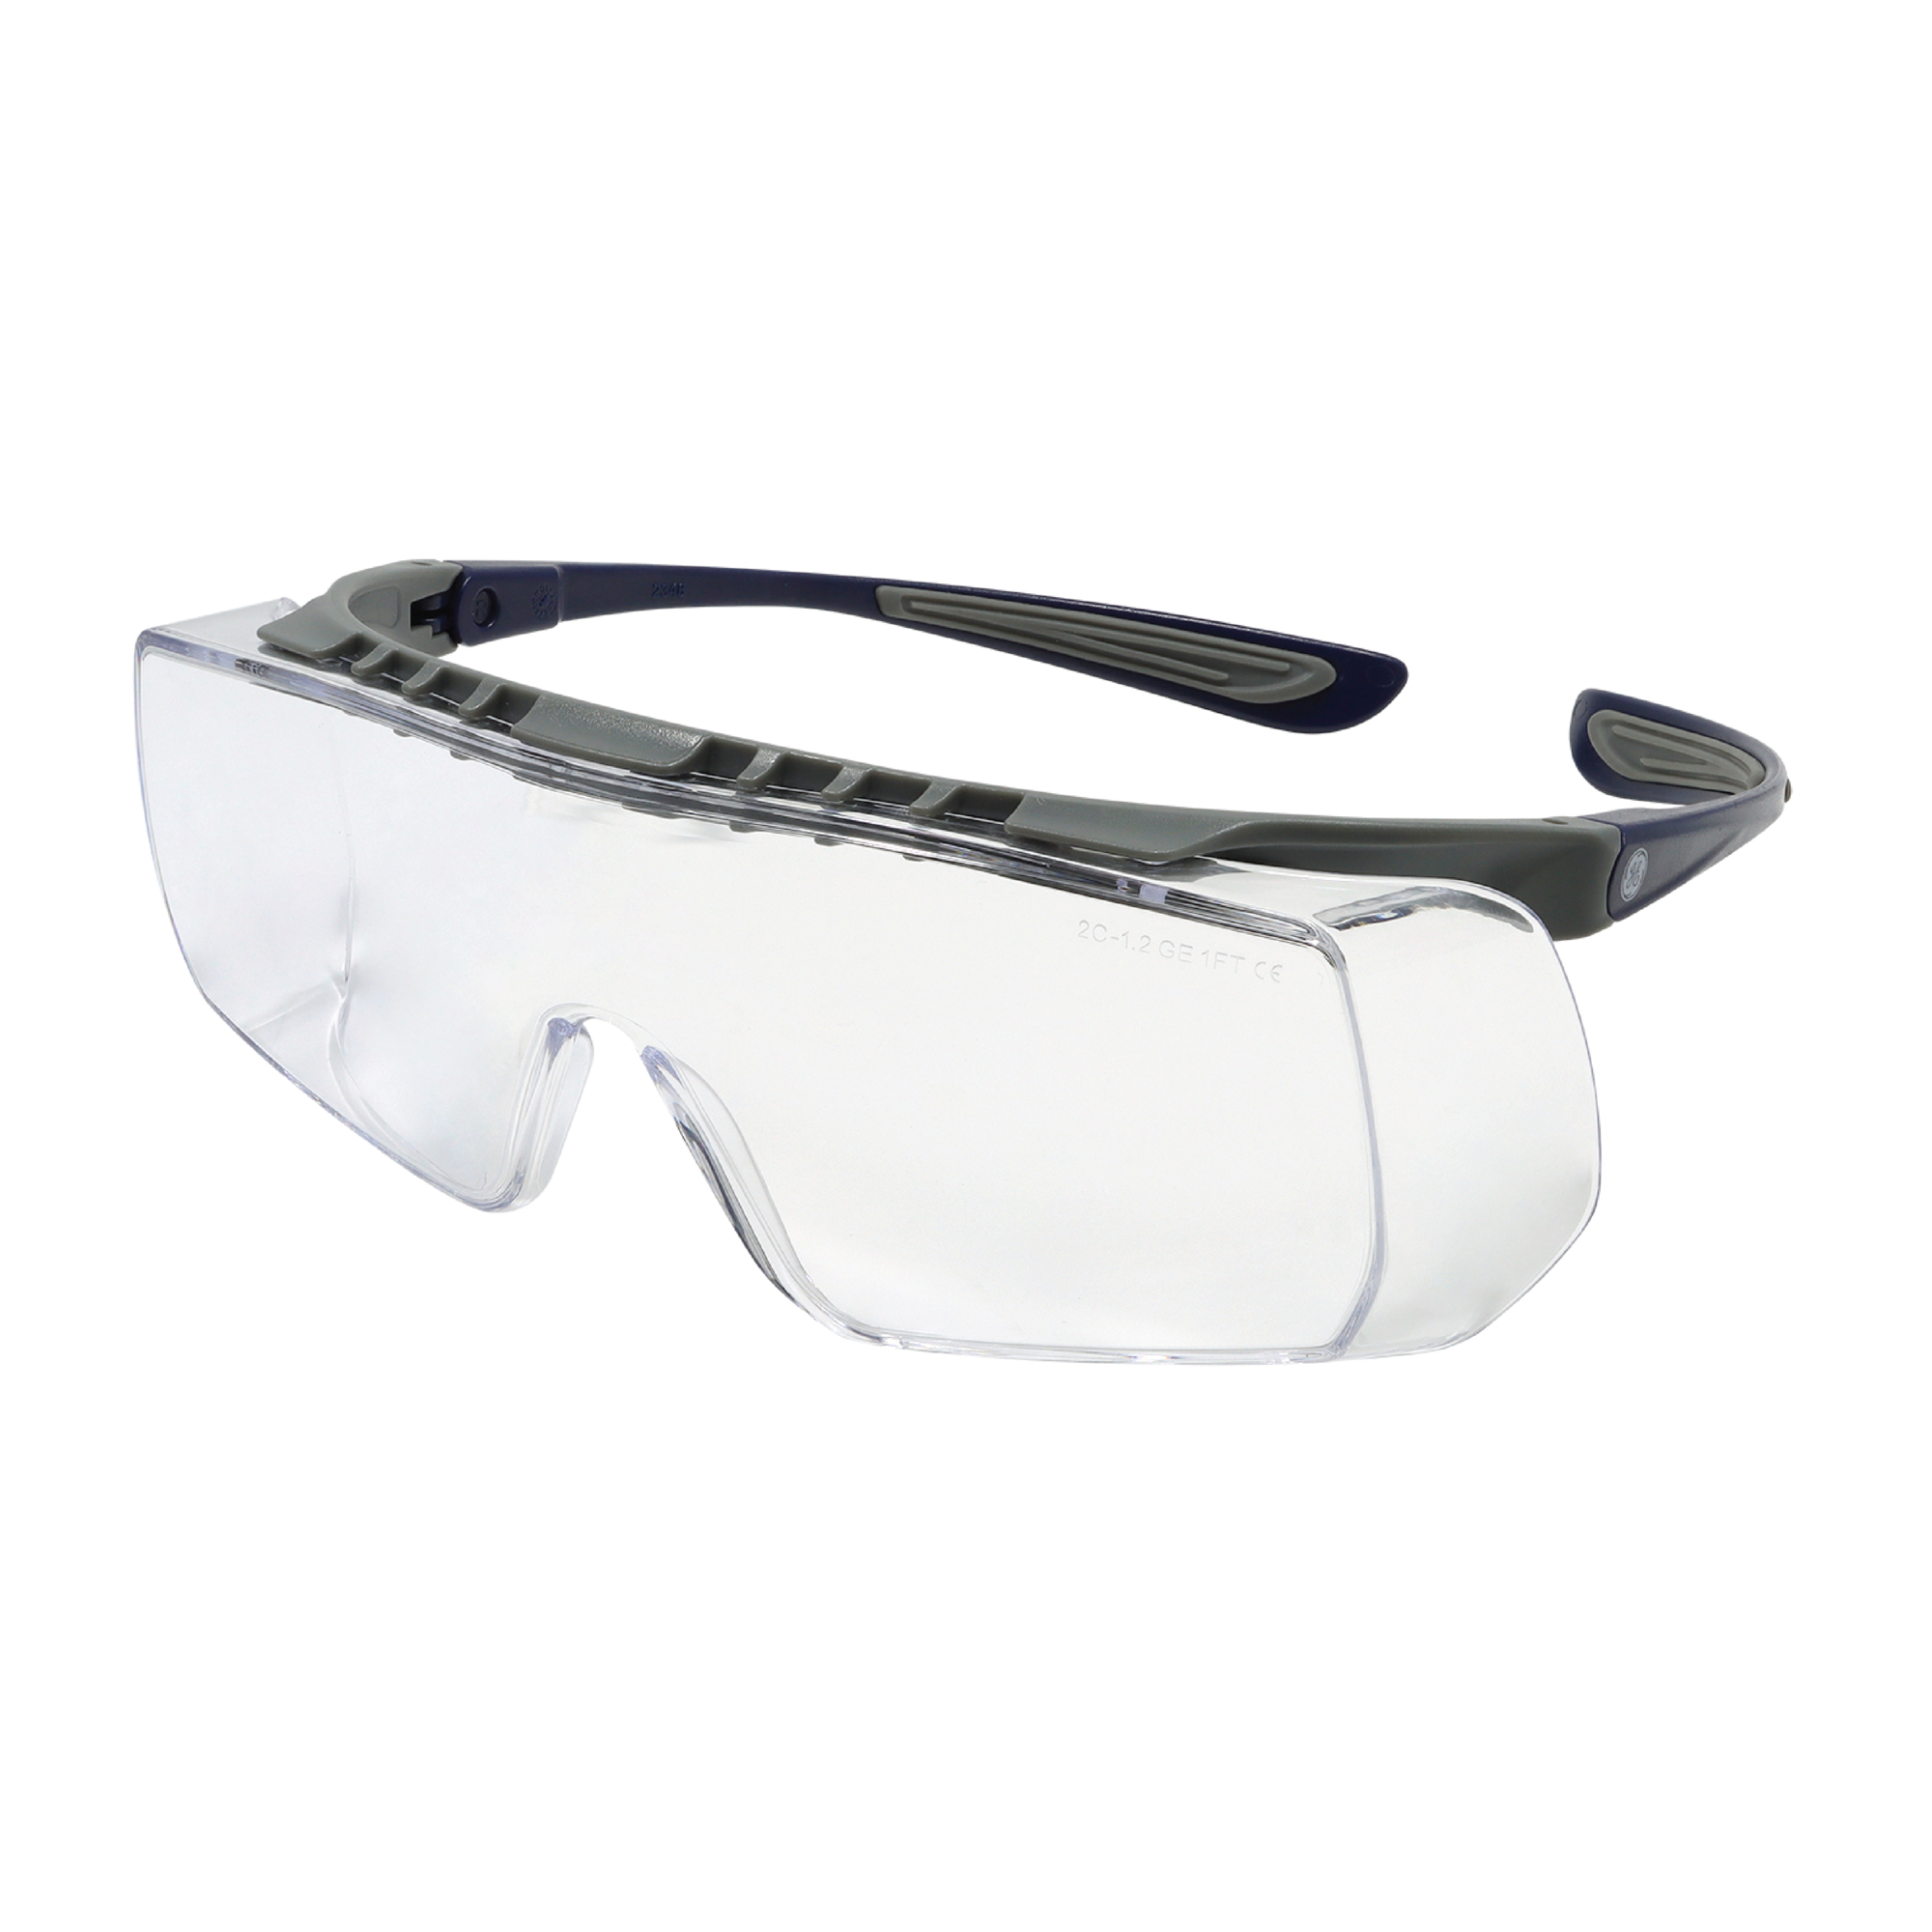 General Electric, Gray/Indigo Frame Safety Glasses w/ Clear Lenses, Frame  Color Gray, Lens Color Clear, ANSI Z87 Compliant, Model# GE112C